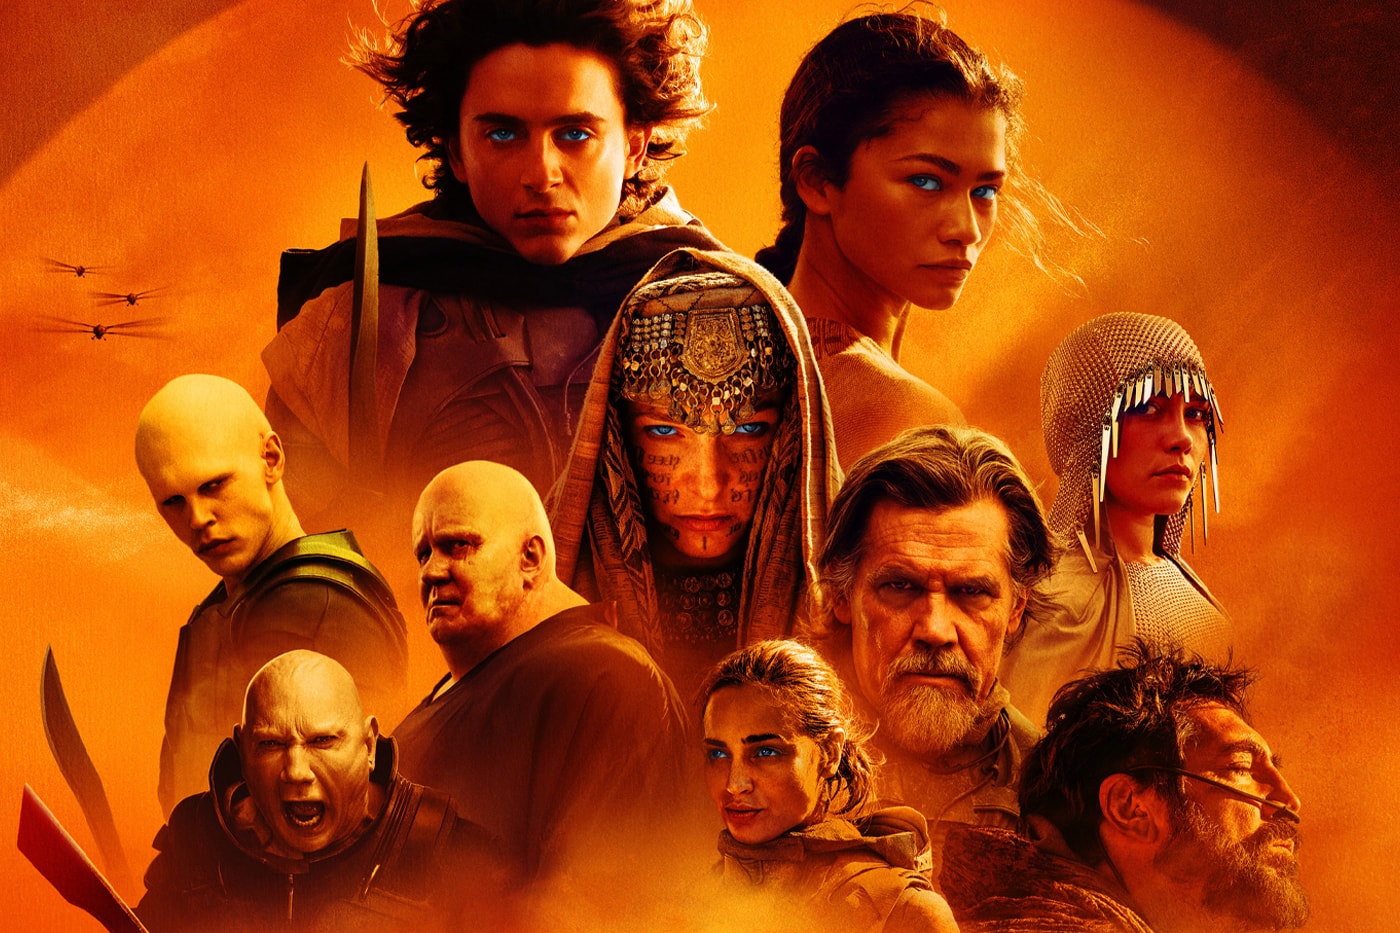 Dune 2 178 Million USD Global Box Office Debut